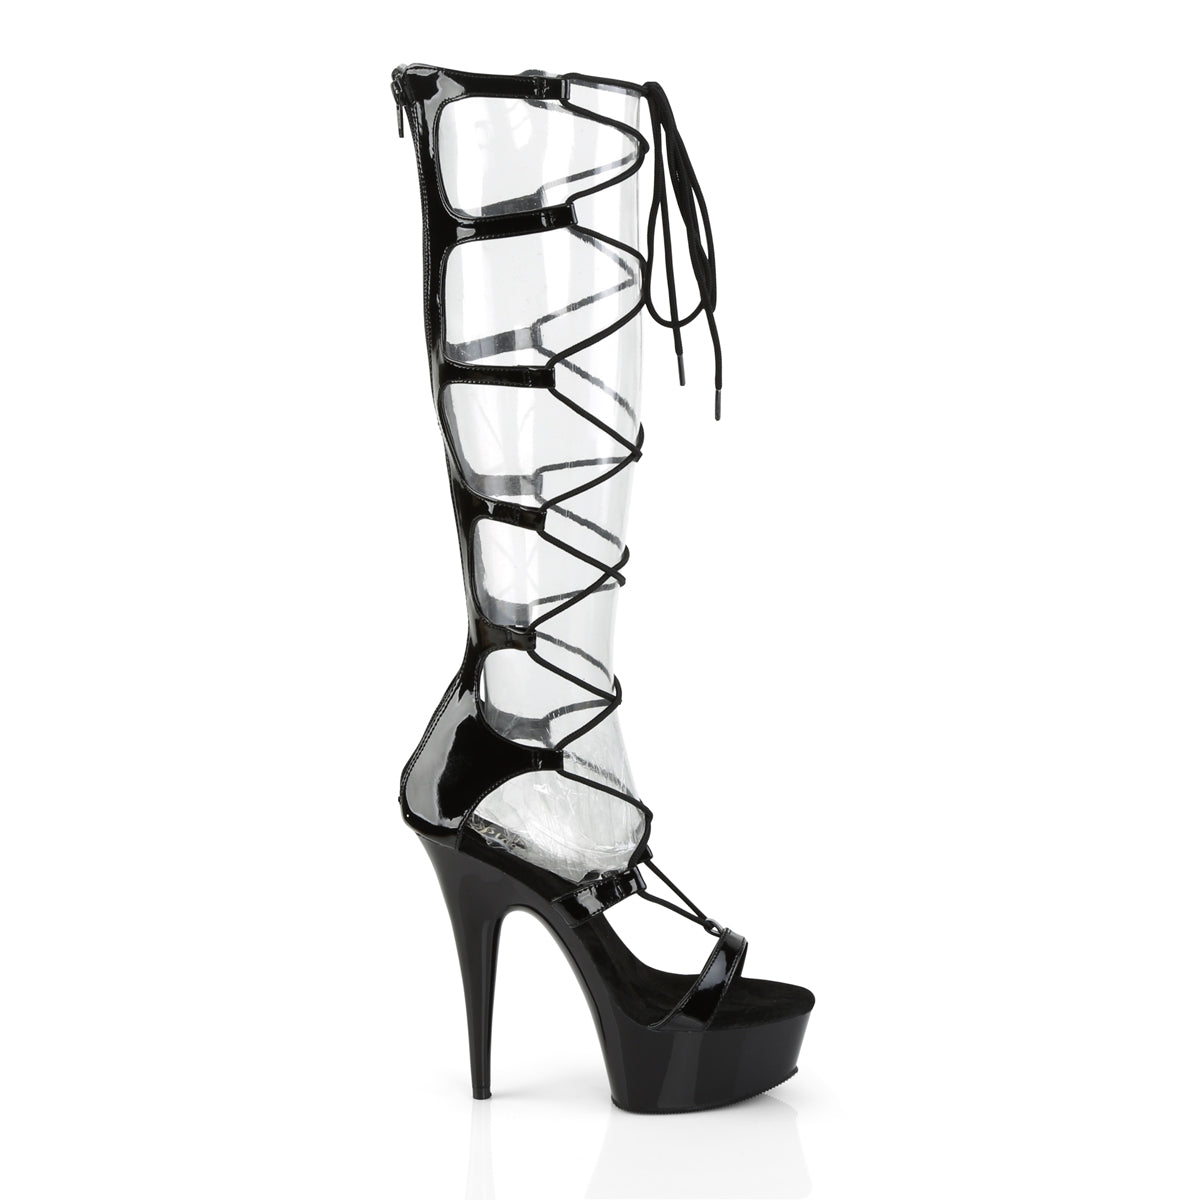 DELIGHT-698 6" Heel Black Patent Pole Dancing Platforms-Pleaser- Sexy Shoes Fetish Heels